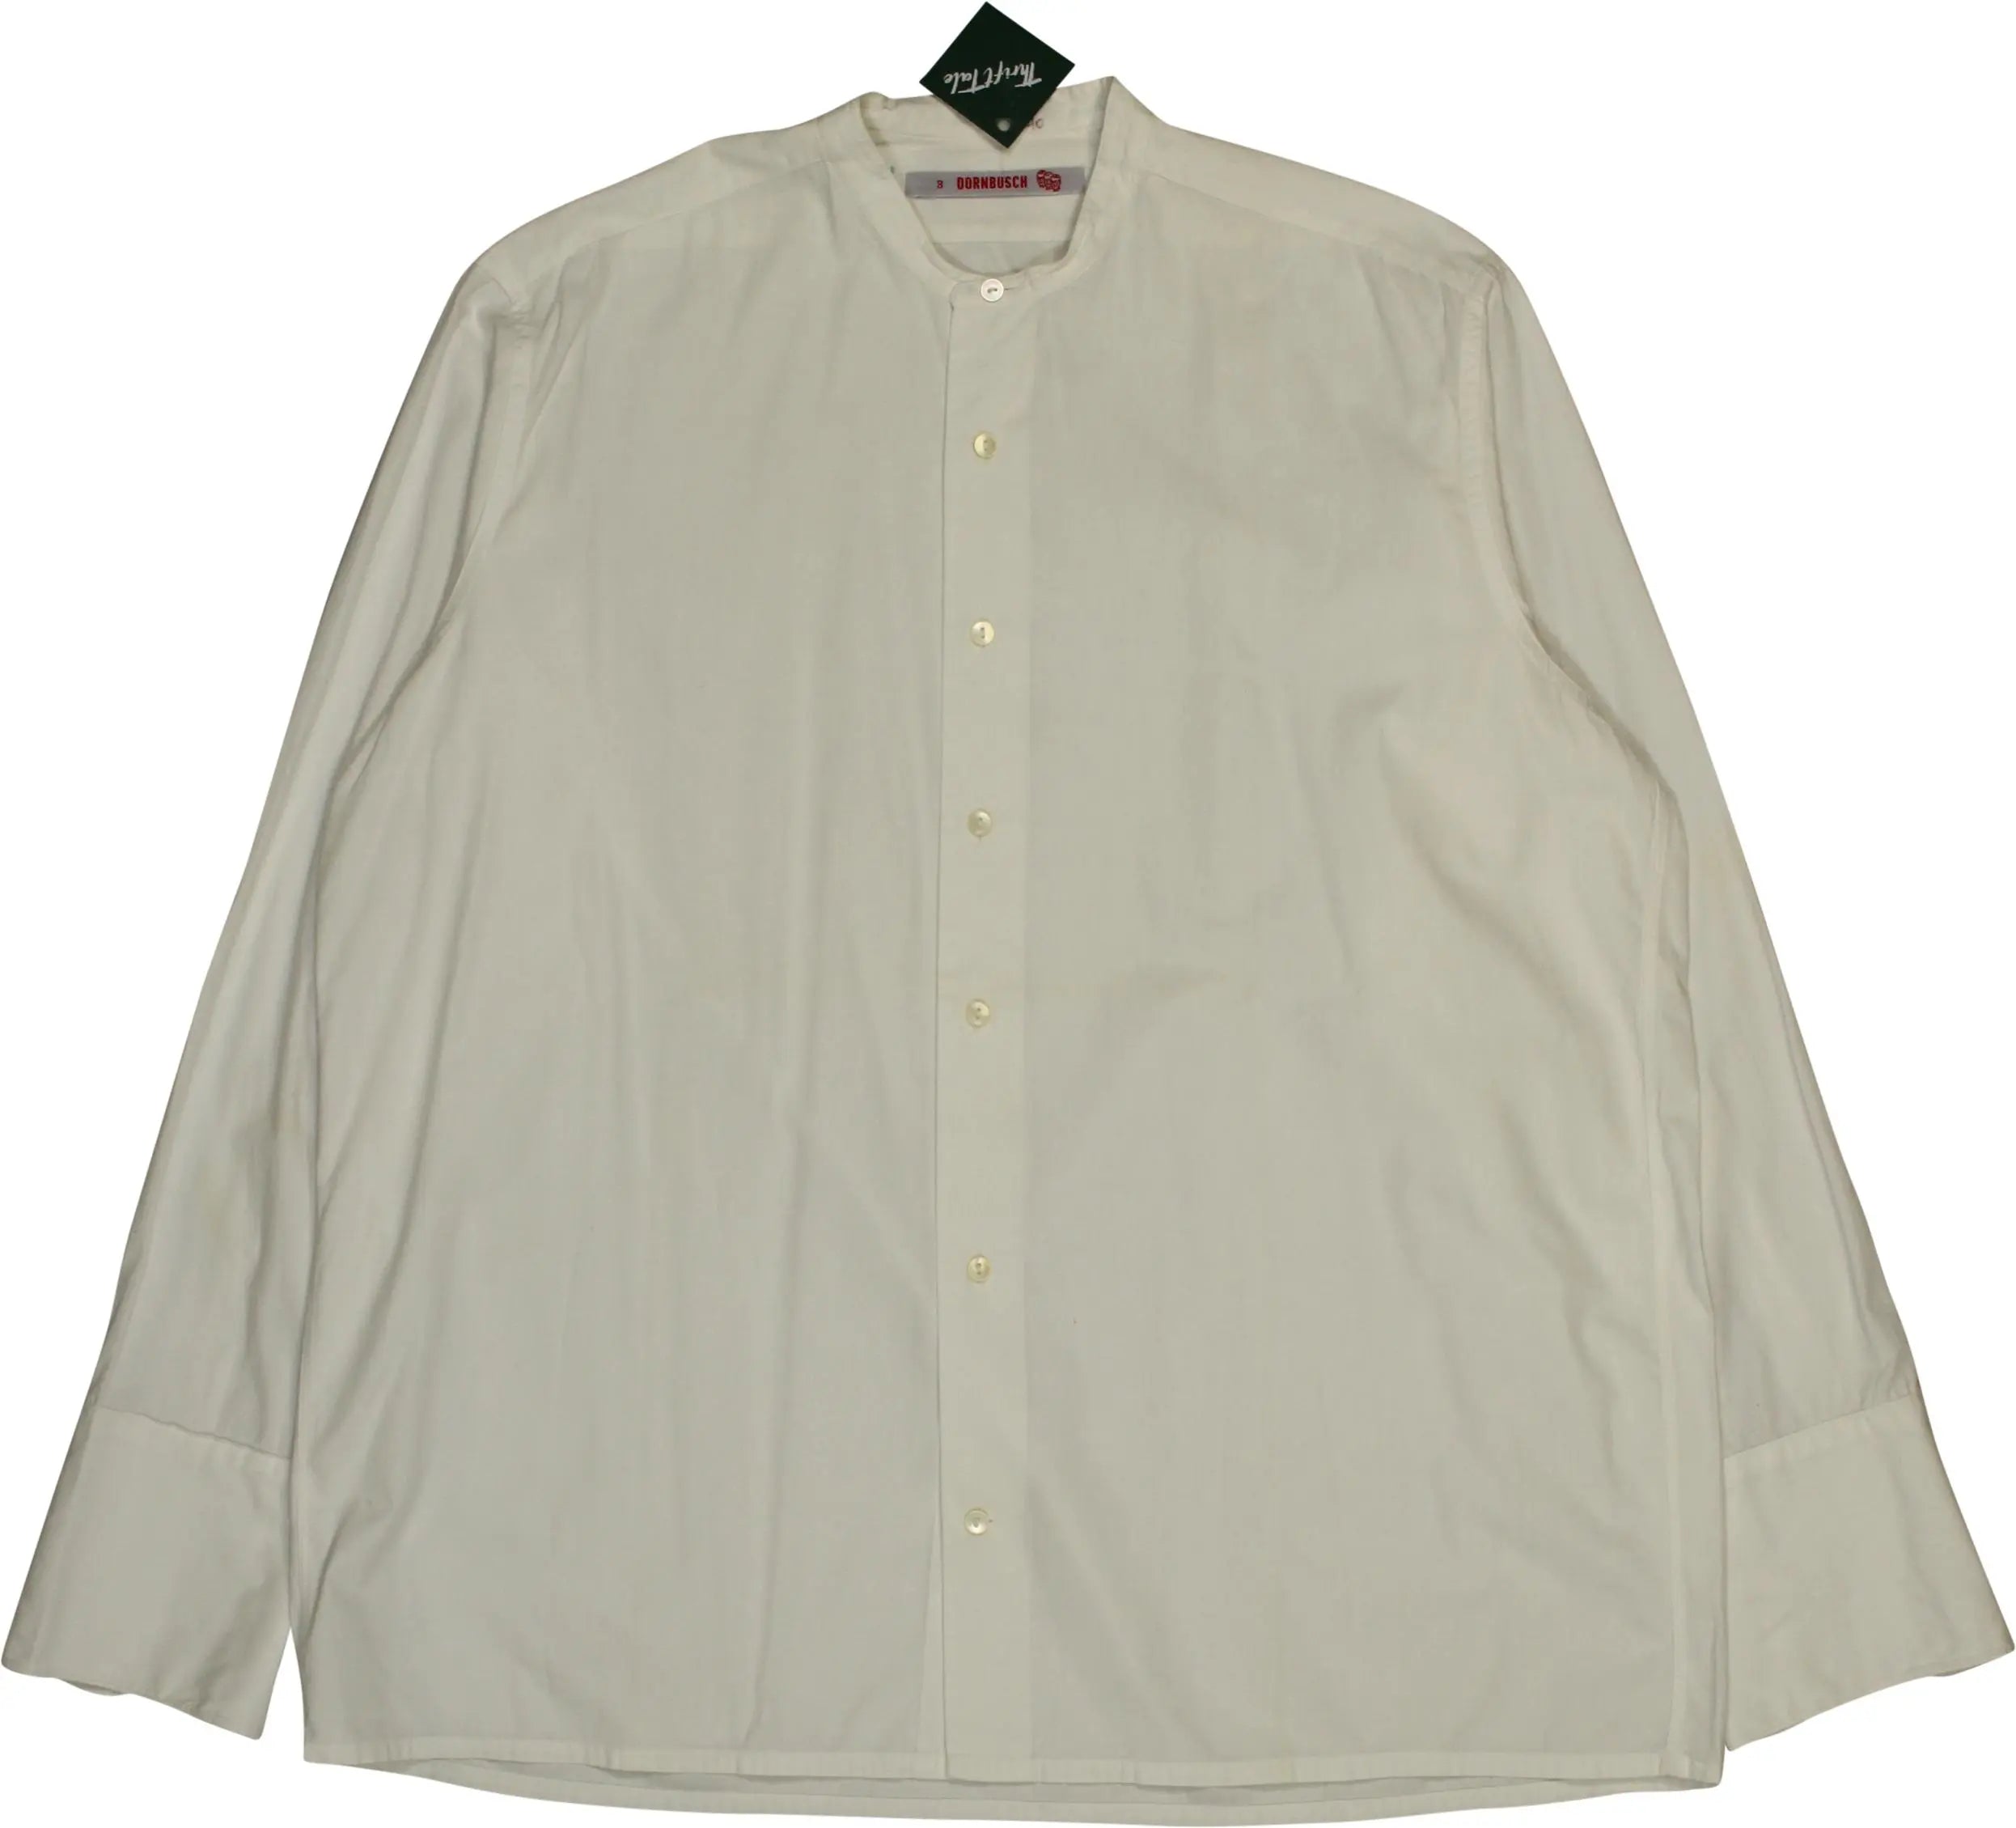 Dornbusch - Grandad Collar Shirt- ThriftTale.com - Vintage and second handclothing